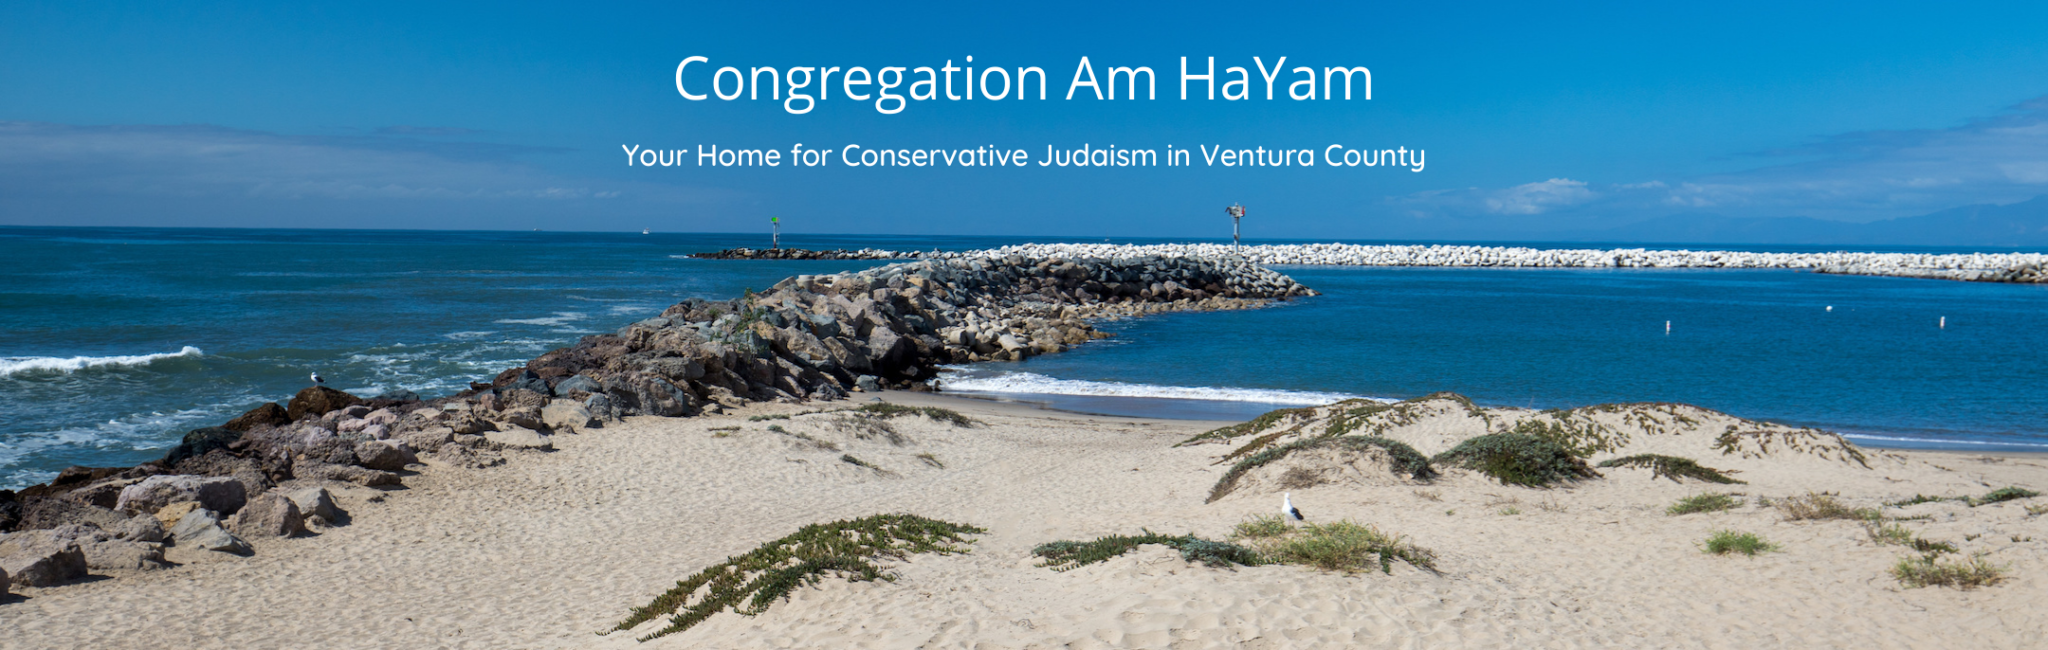 am-hayam-conservative-judaism-ventura-county-beach-scene-cover-2048x650